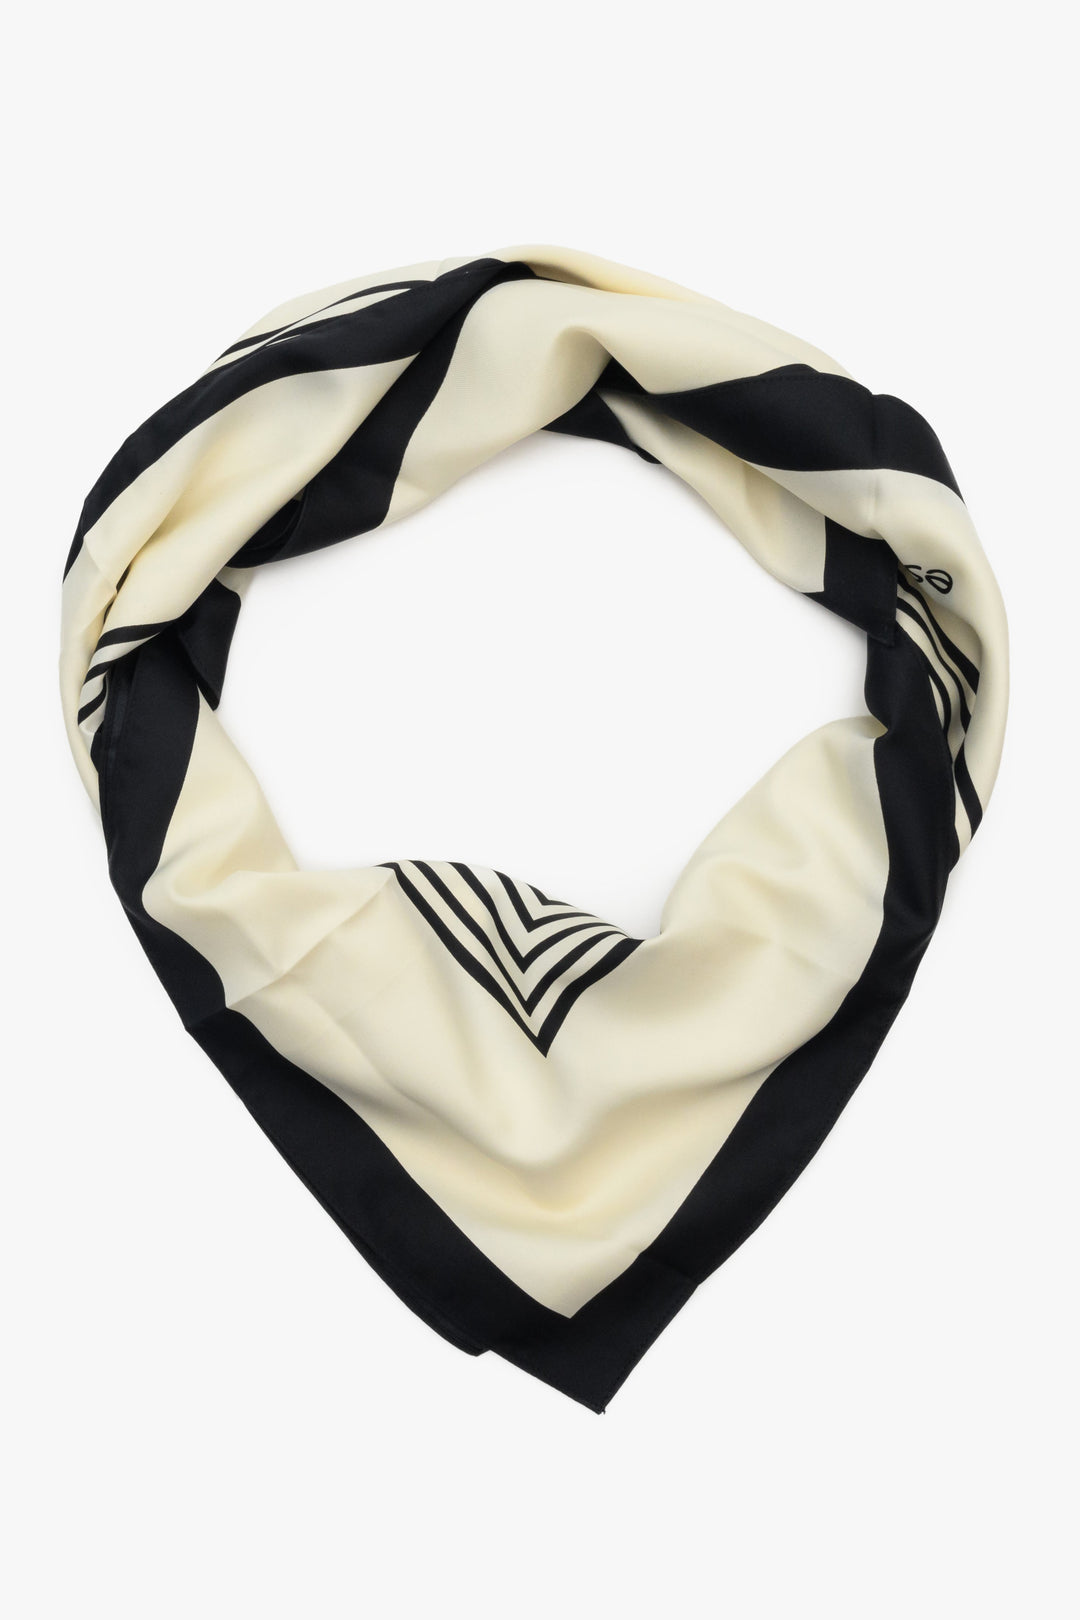 Women's beige-black neckerchief by Estro.